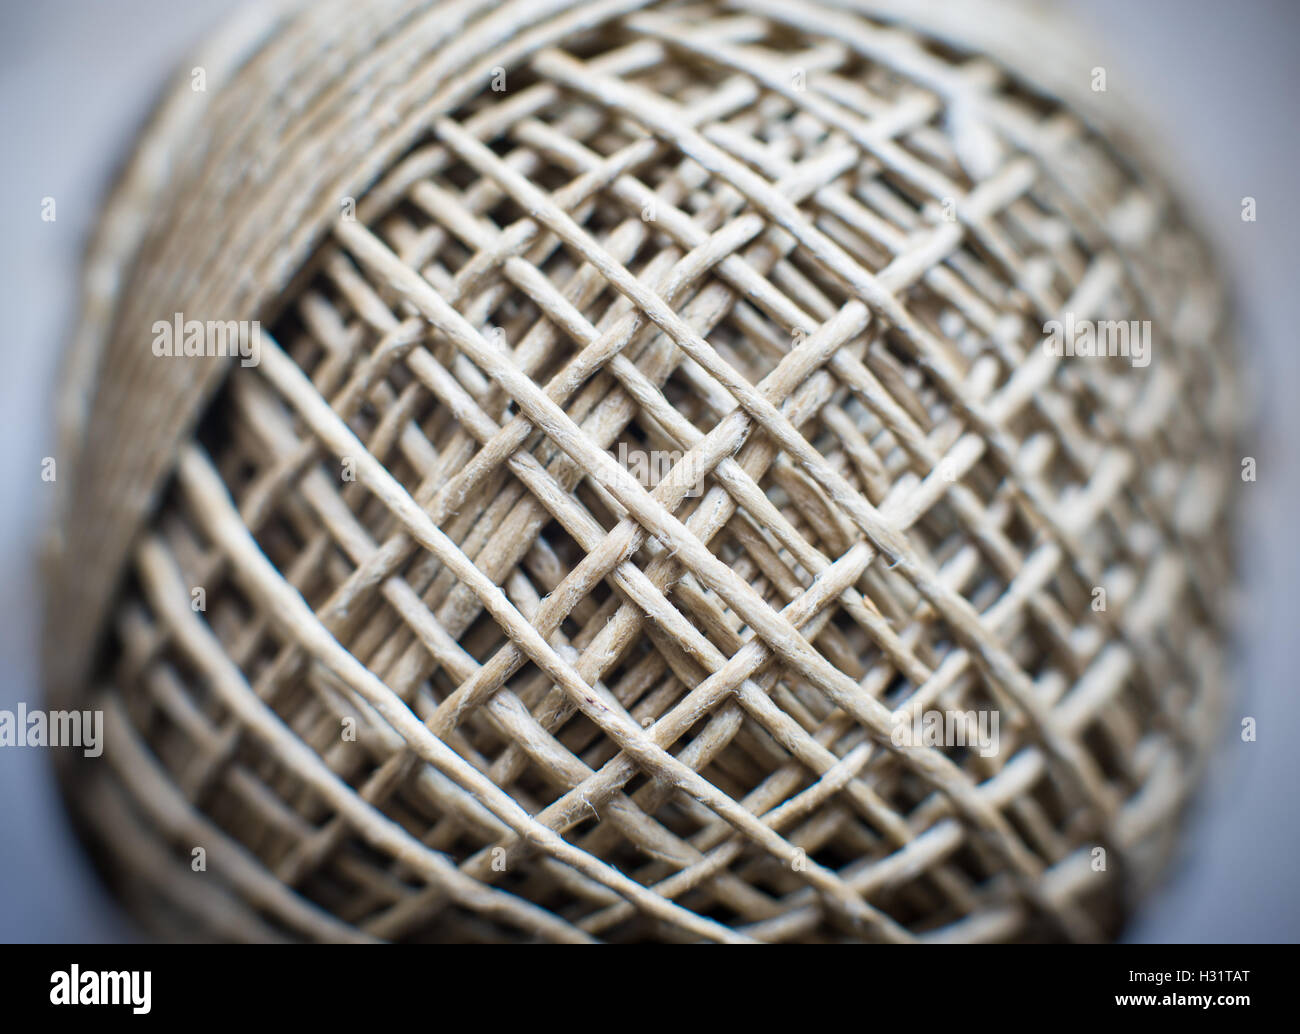 Bindfäden Sie Kugel Twist Makro Detail, Tiefenschärfe, angeschlossenen Web-Welt-Konzept Stockfoto